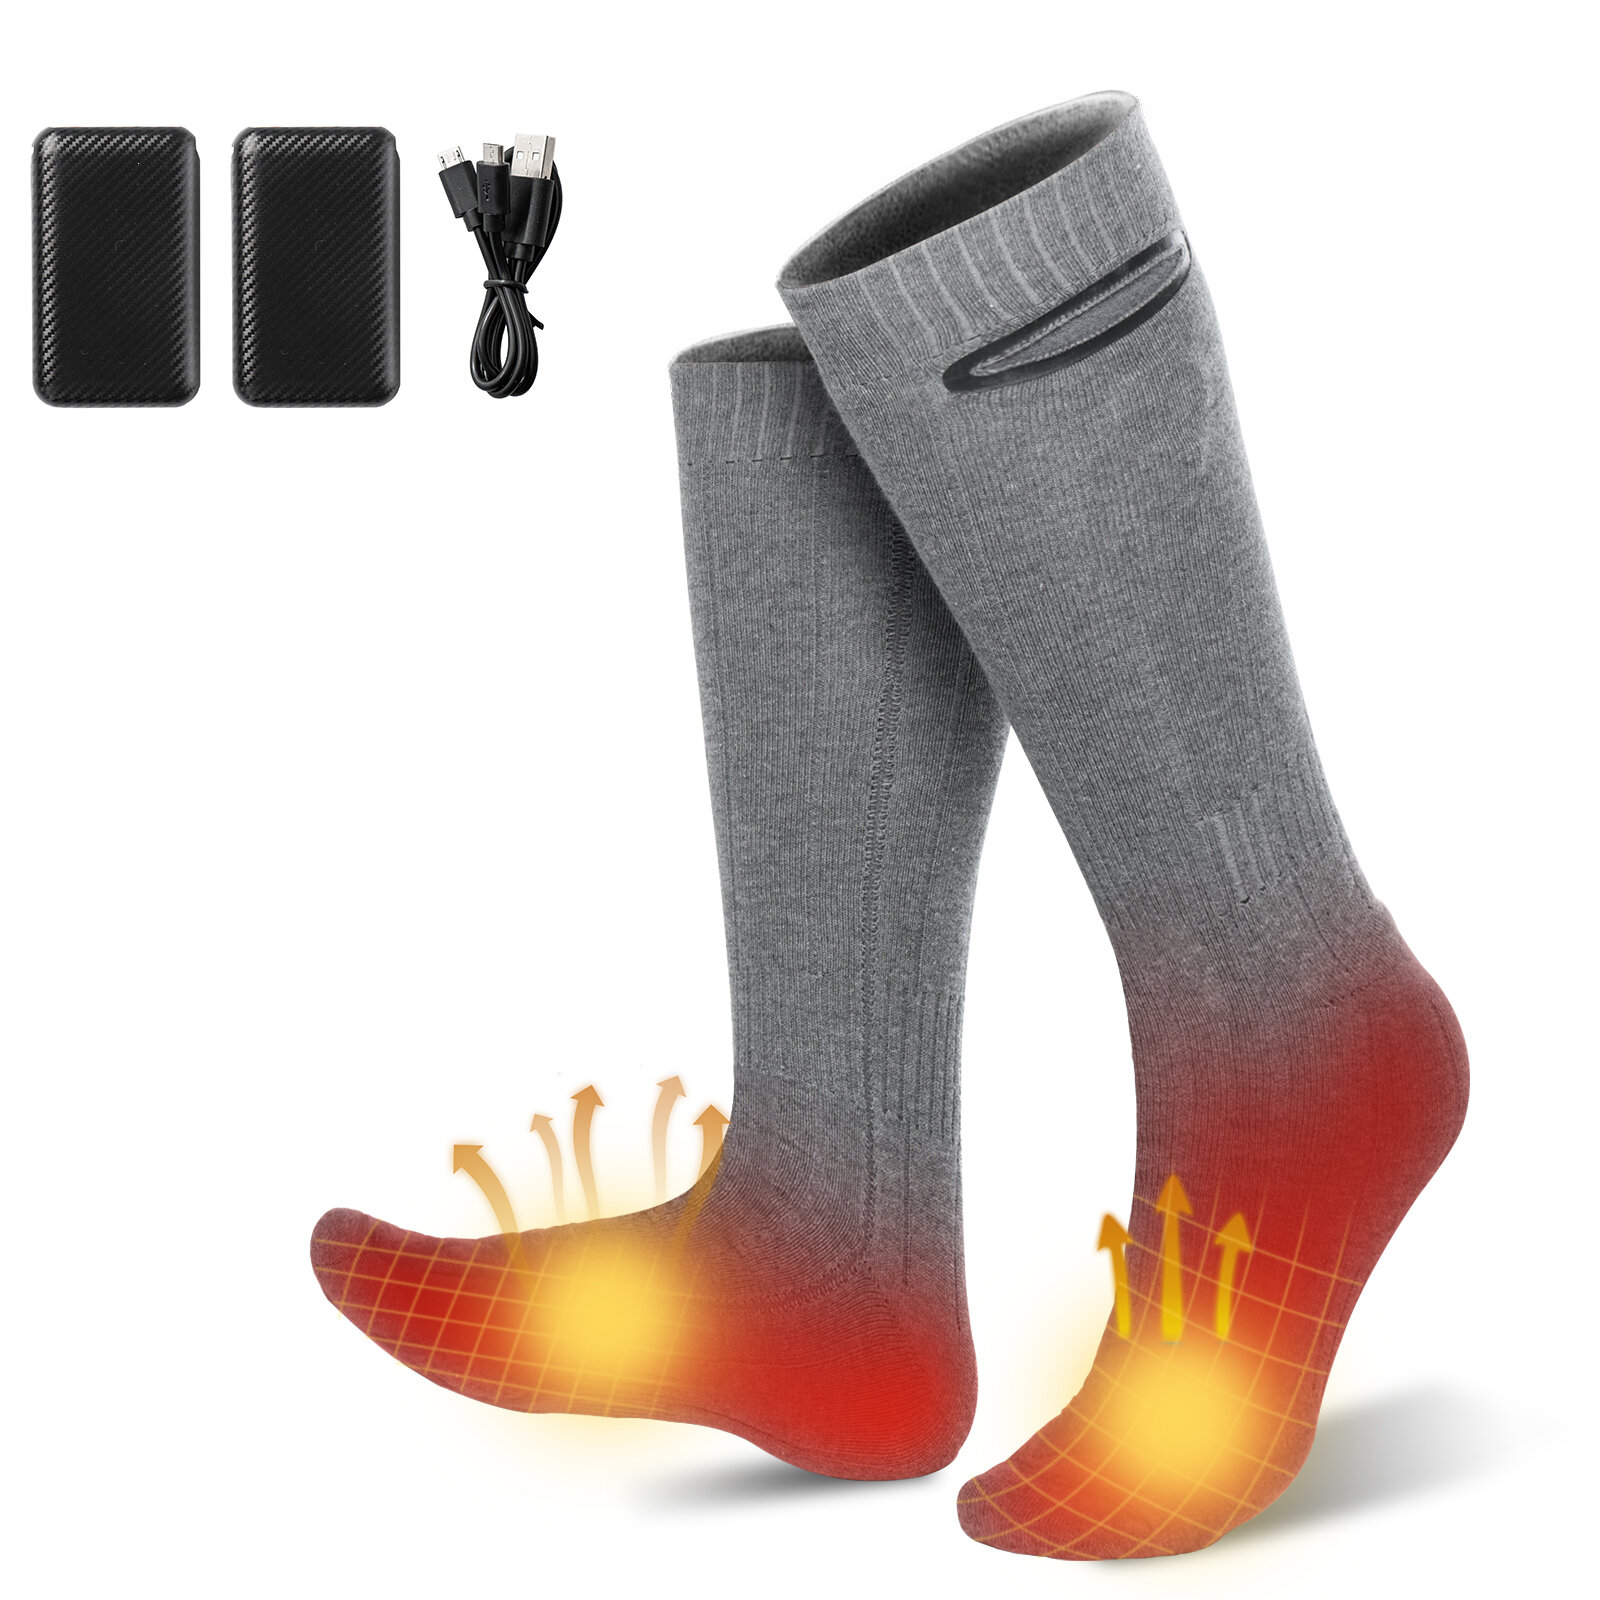 Unisex Heated Socks Electric Heated Socks Rechargeable 3.7v 4500mAh Foot Warmer Thermal Socks Warm W